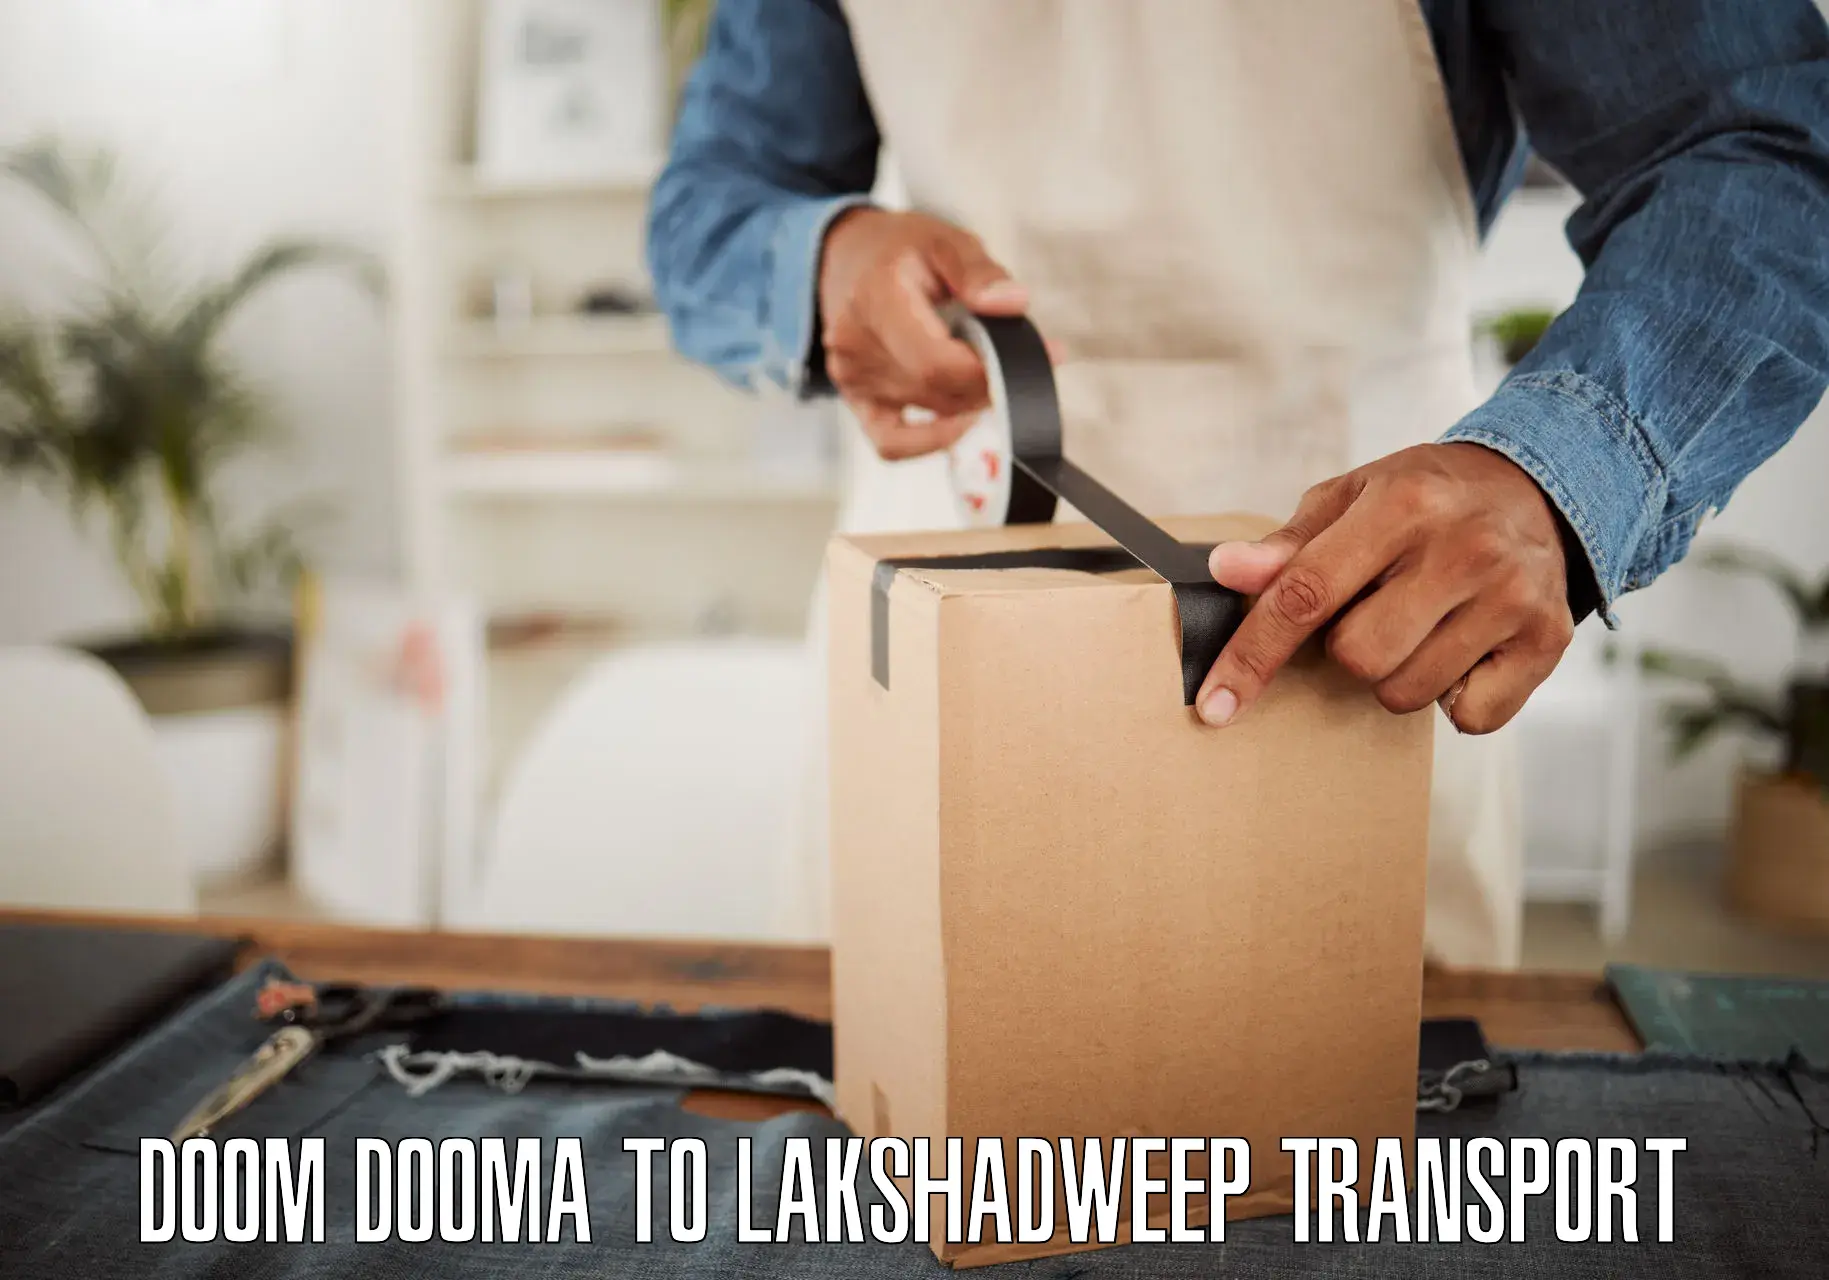 Lorry transport service Doom Dooma to Lakshadweep